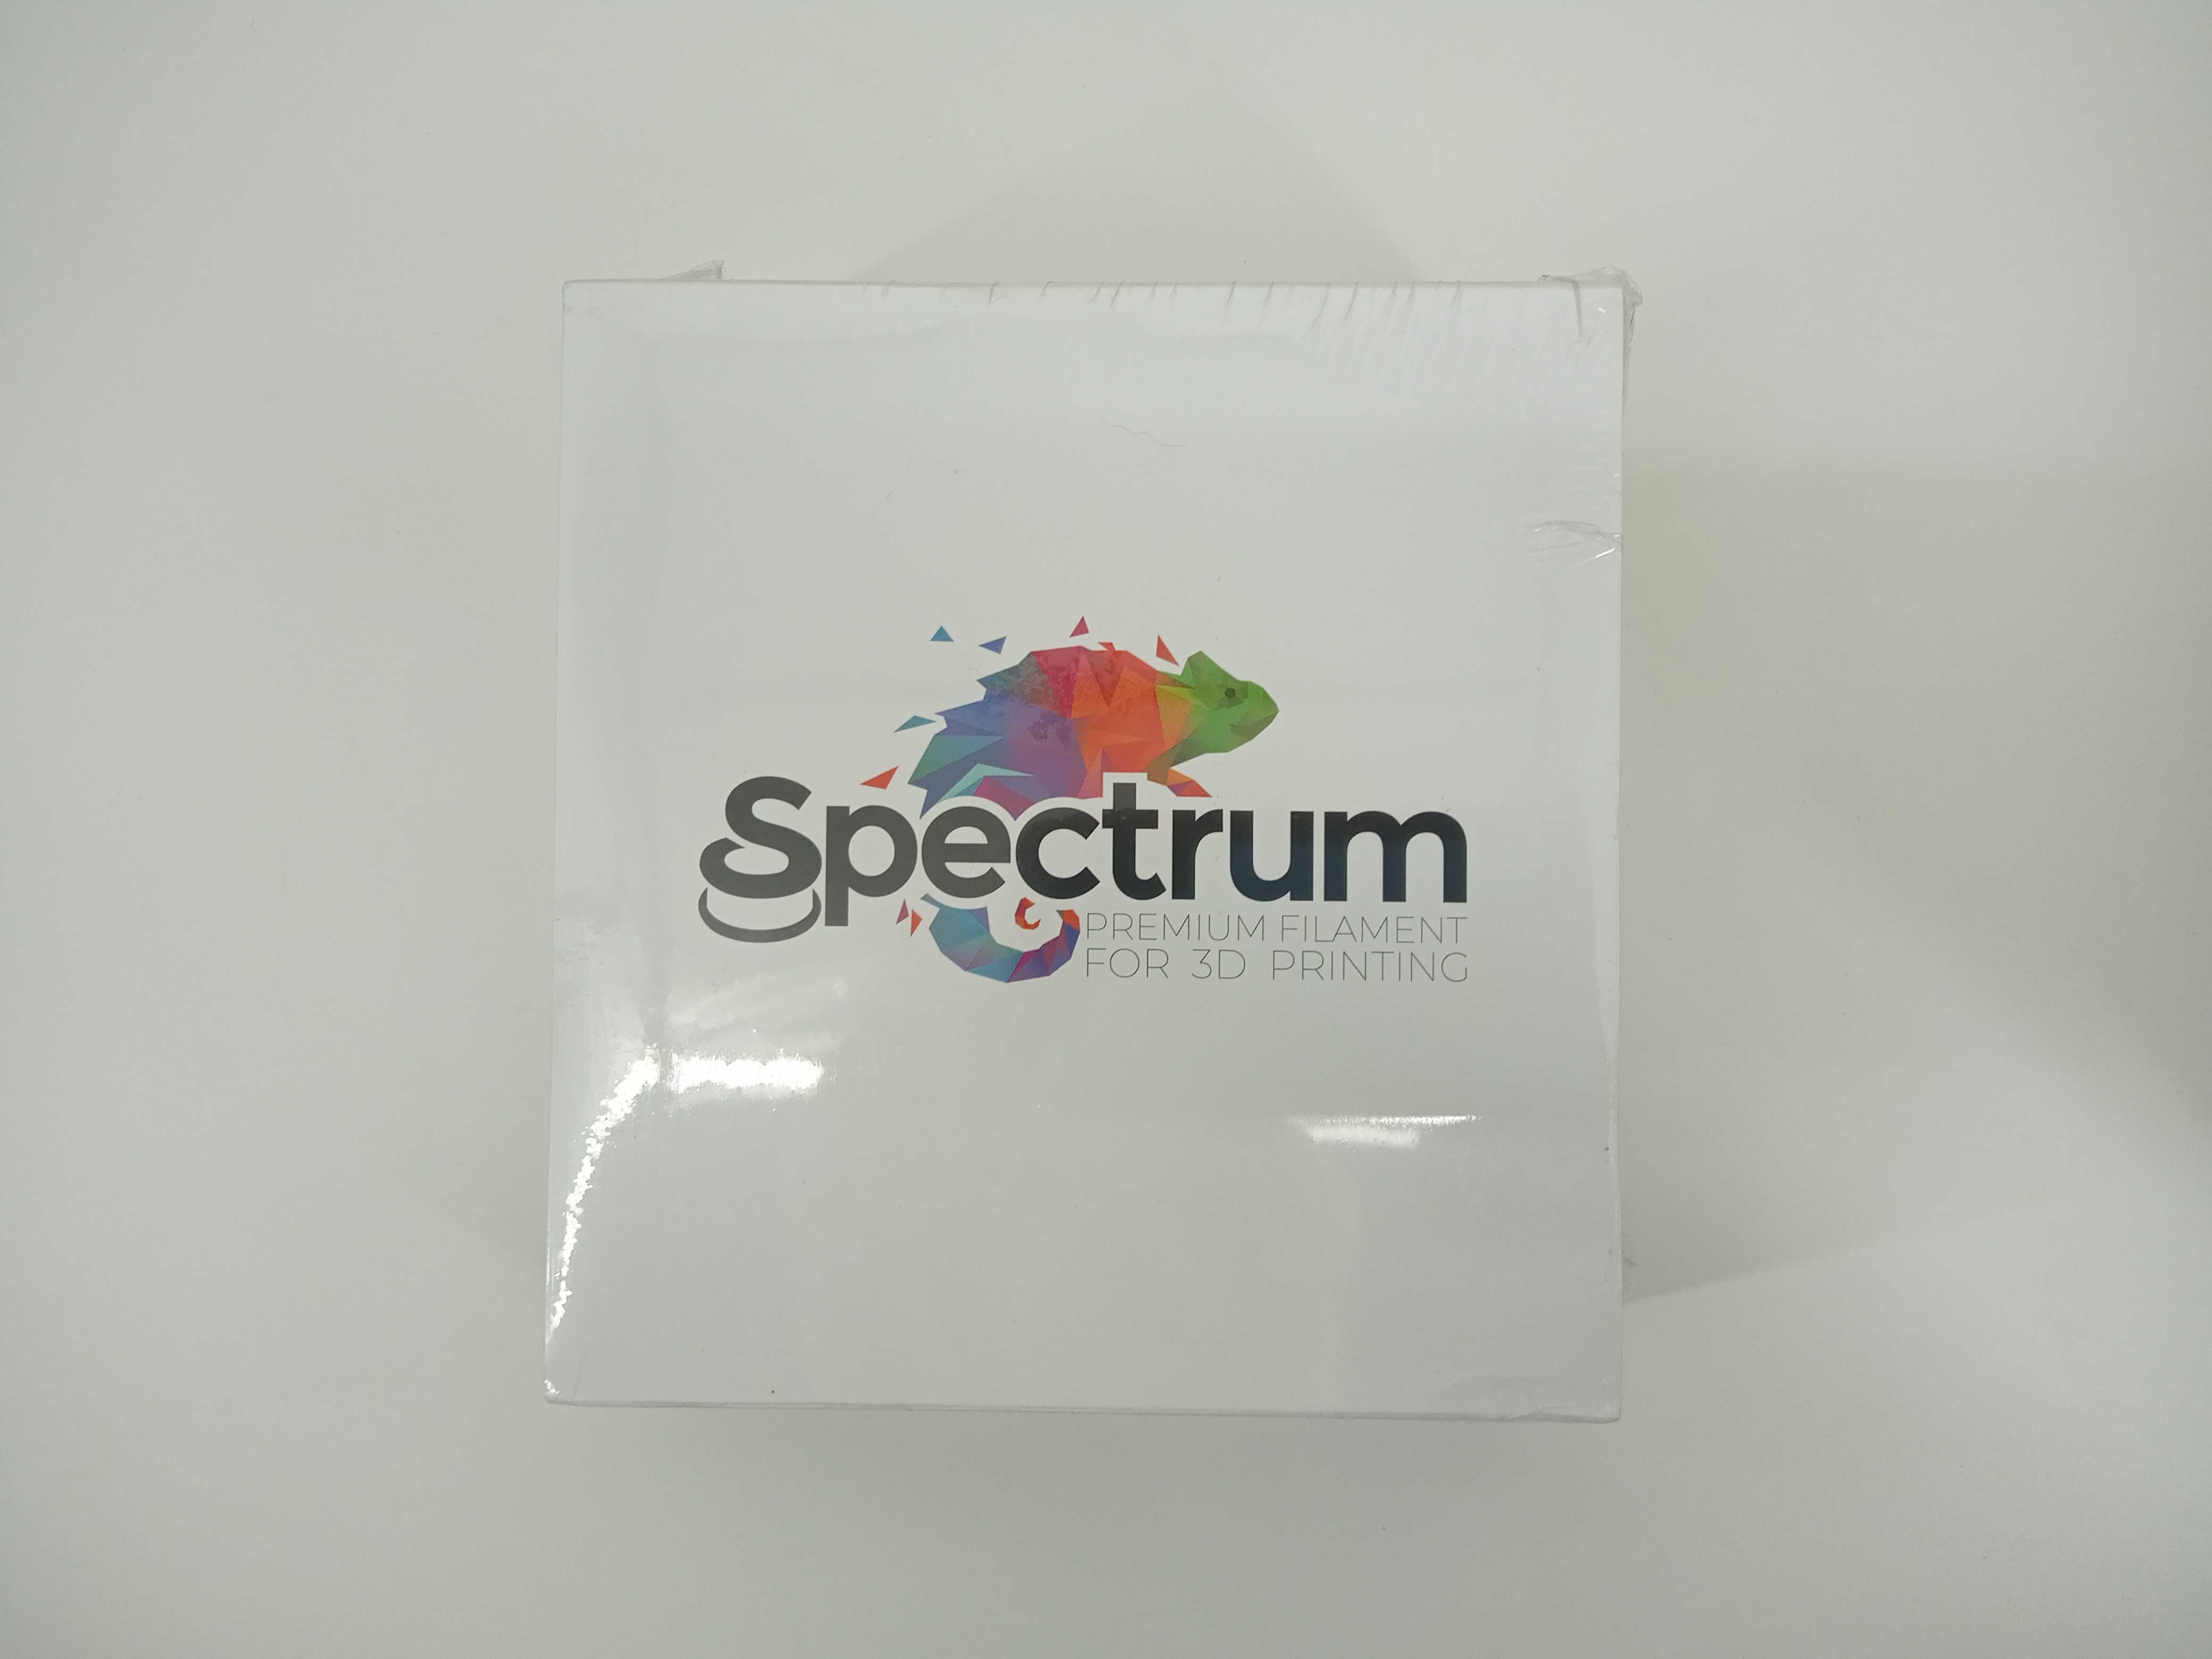 Filament Spectrum S-Flex 90A 1.75mm 0.25kg czerwony